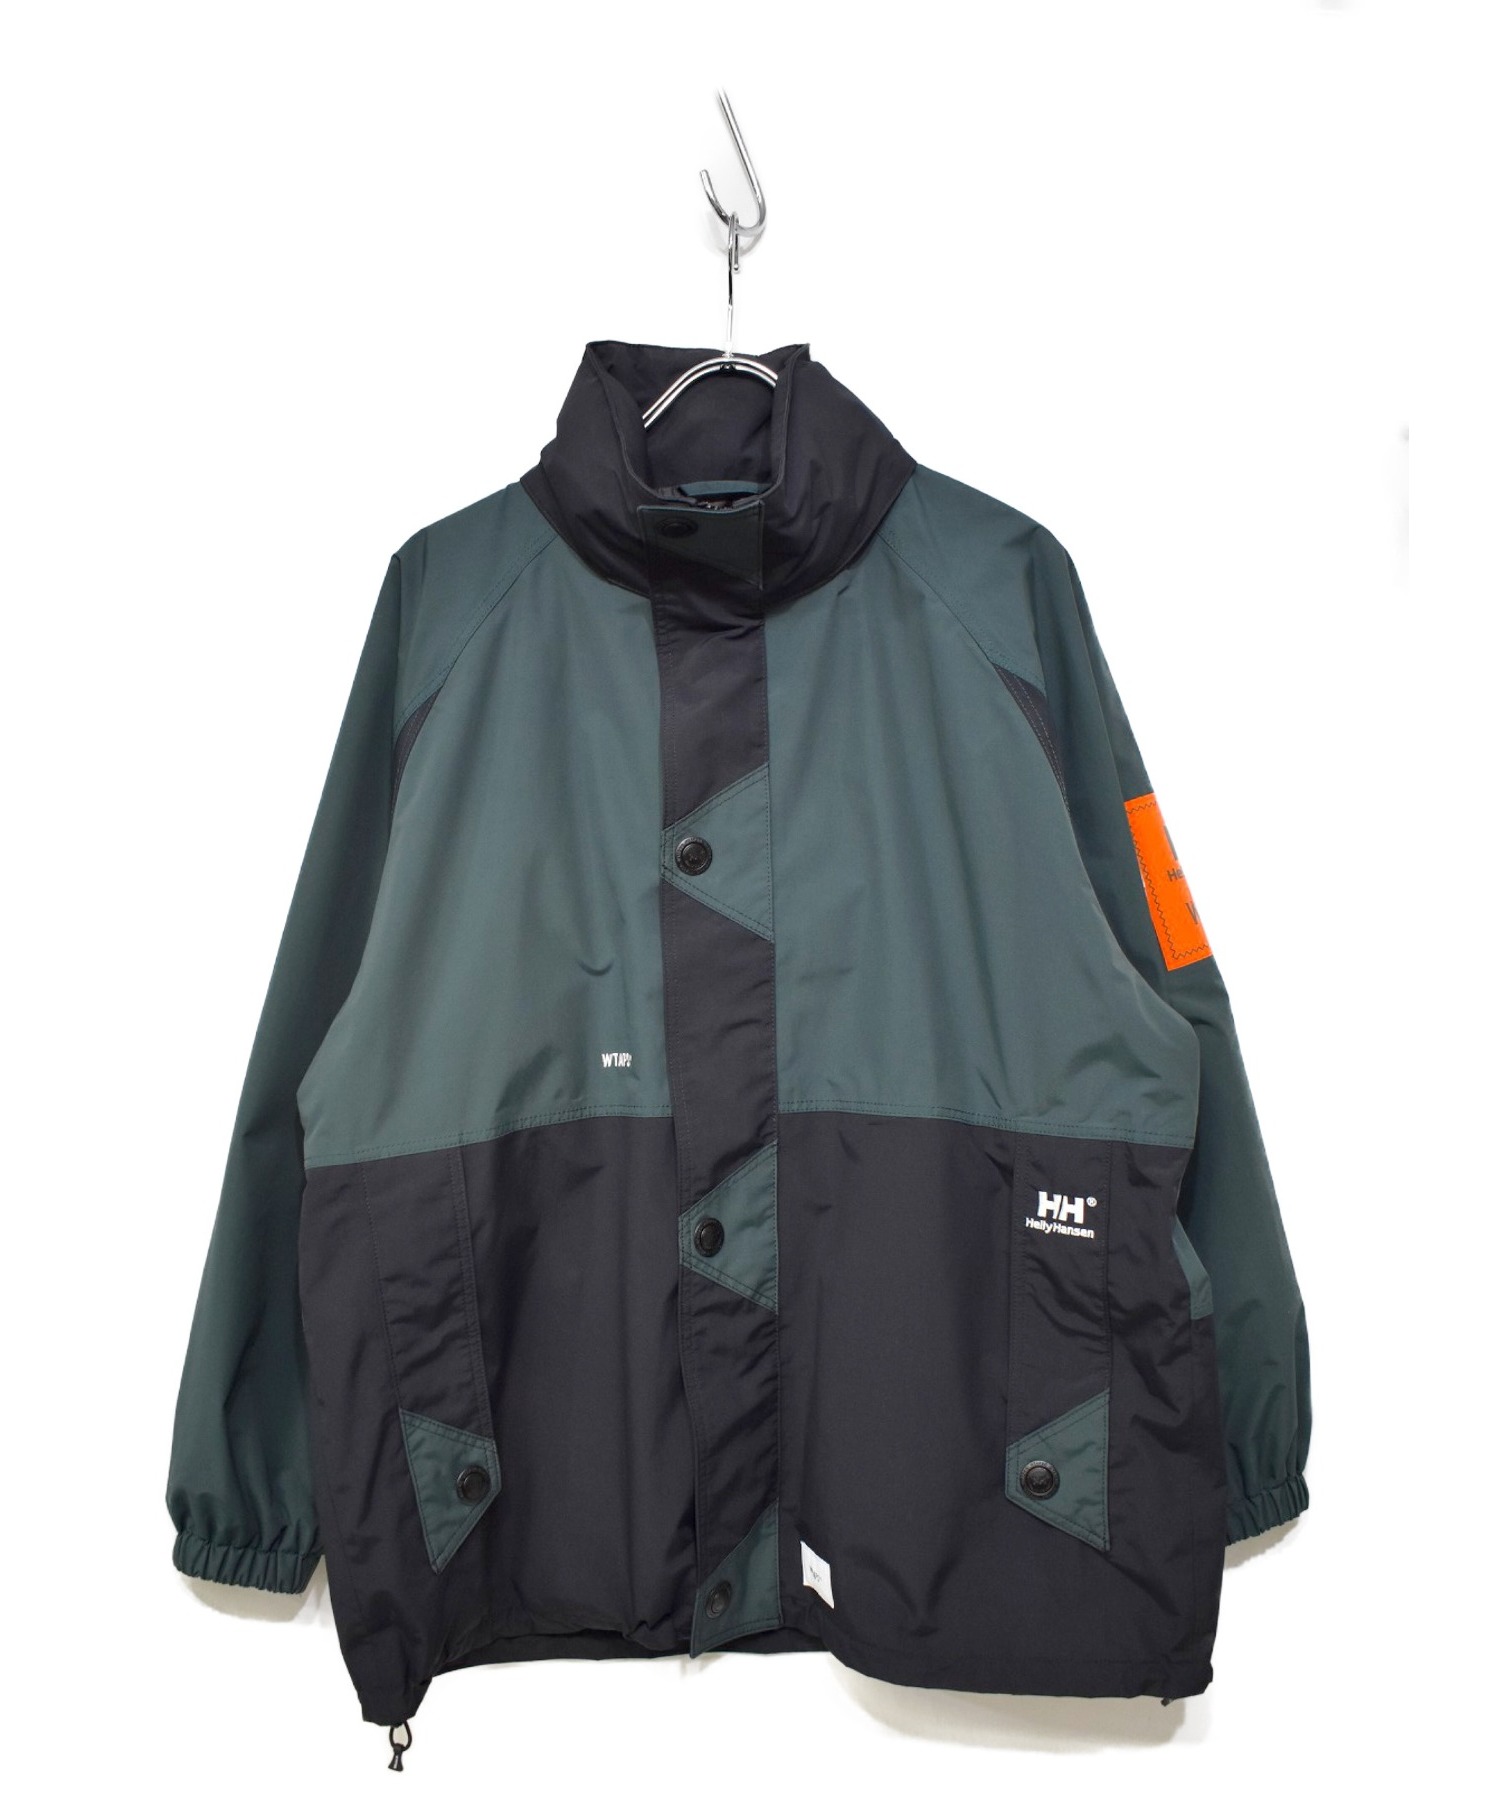 WTAPS (ダブルタップス) BOW Helly Hansen green jacket ダークグリーン×ブラック サイズ:2